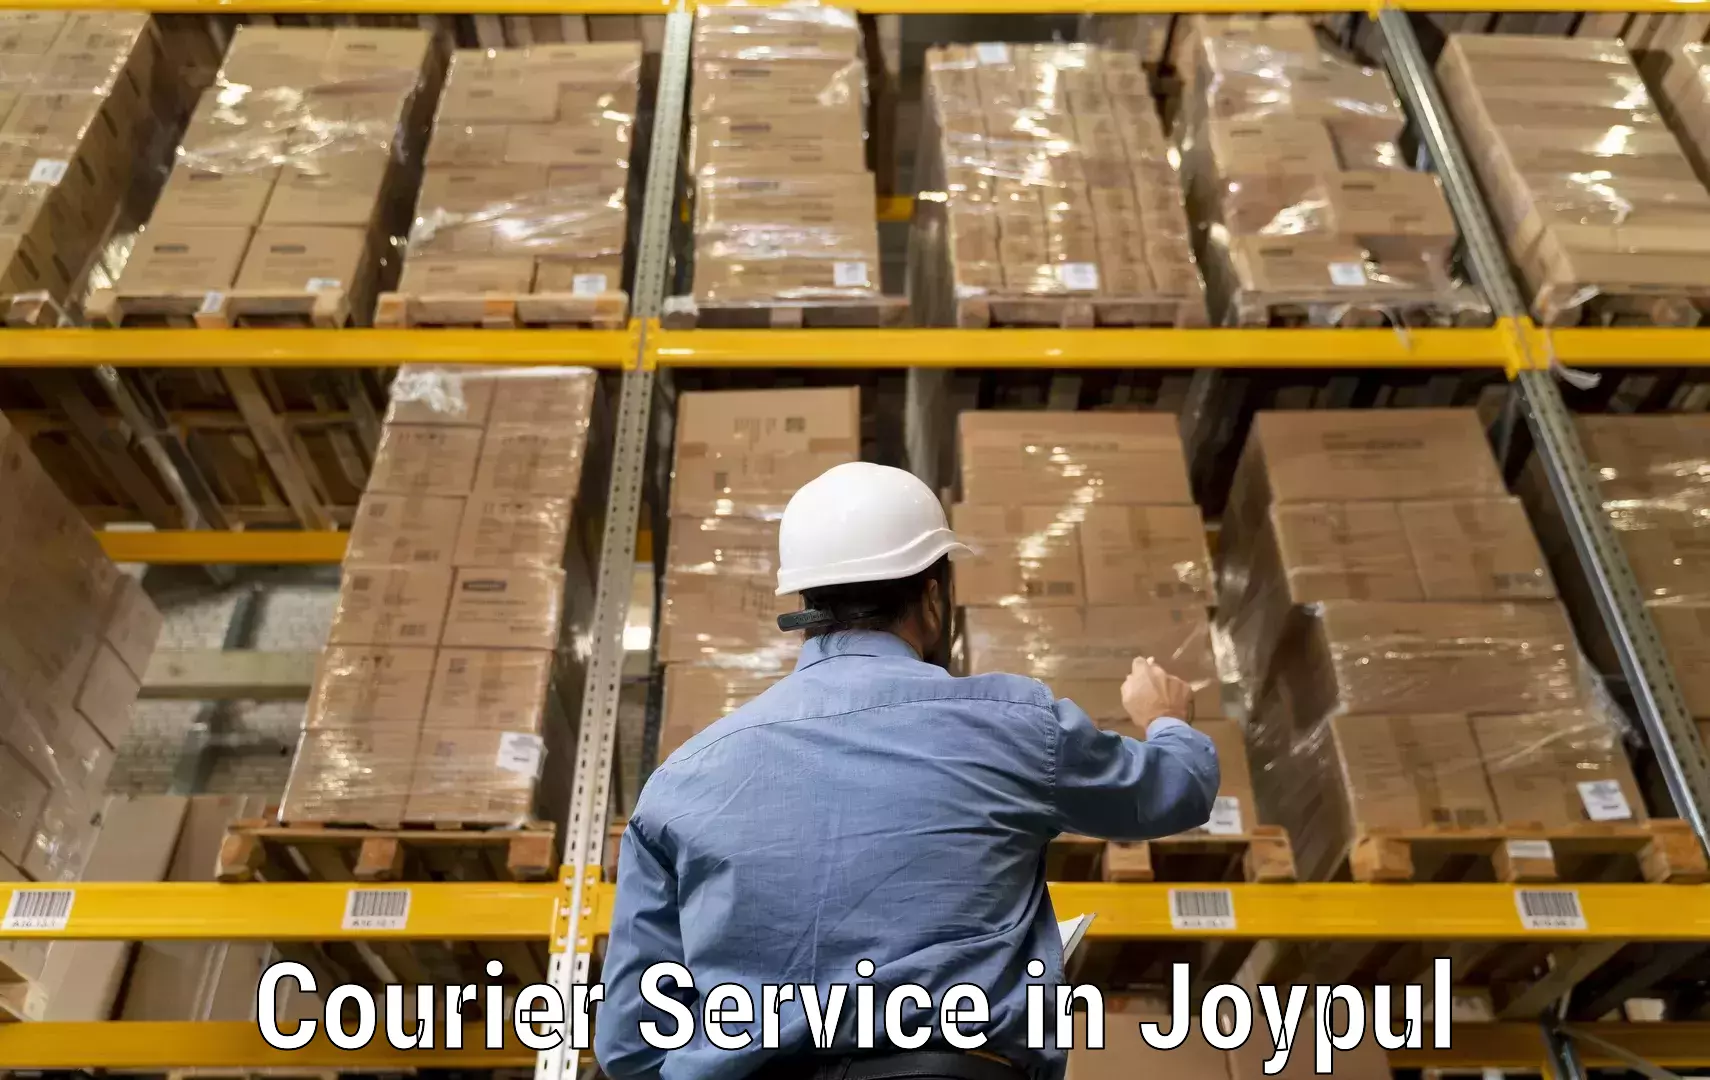 Express package handling in Joypul